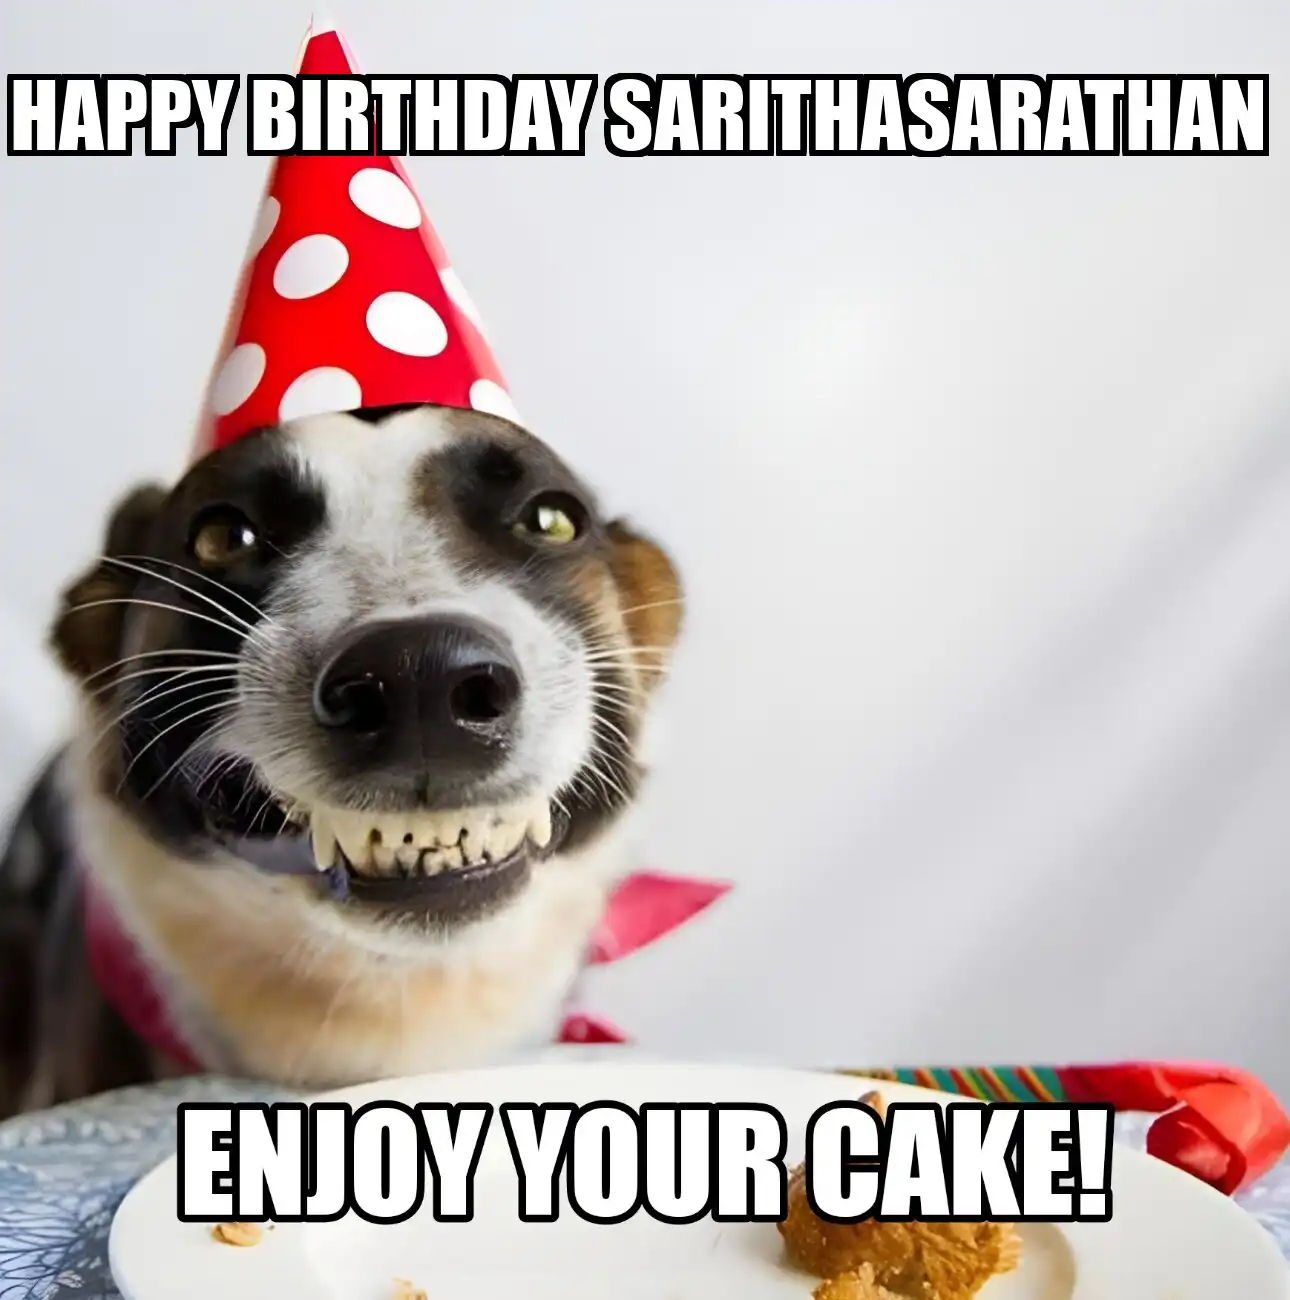 Happy Birthday Sarithasarathan Enjoy Your Cake Dog Meme